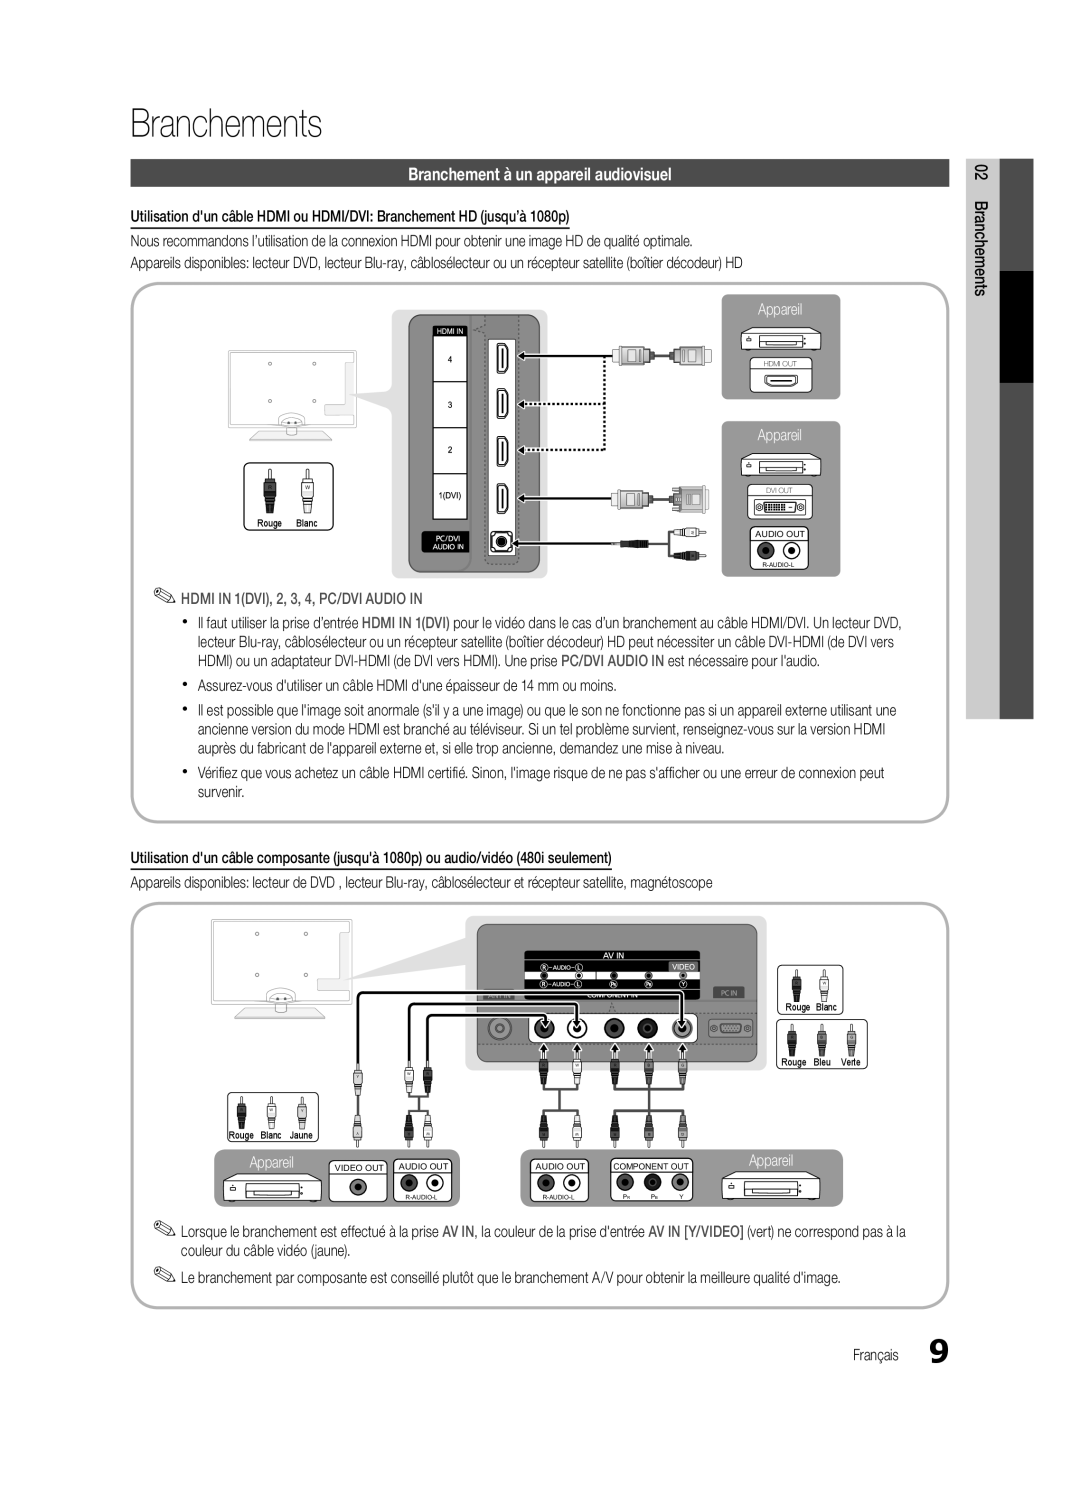 Samsung UC5000-ZC Branchements, Branchement à un appareil audiovisuel, Appareil, HDMI IN 1DVI, 2, 3, 4, PC/DVI AUDIO IN 